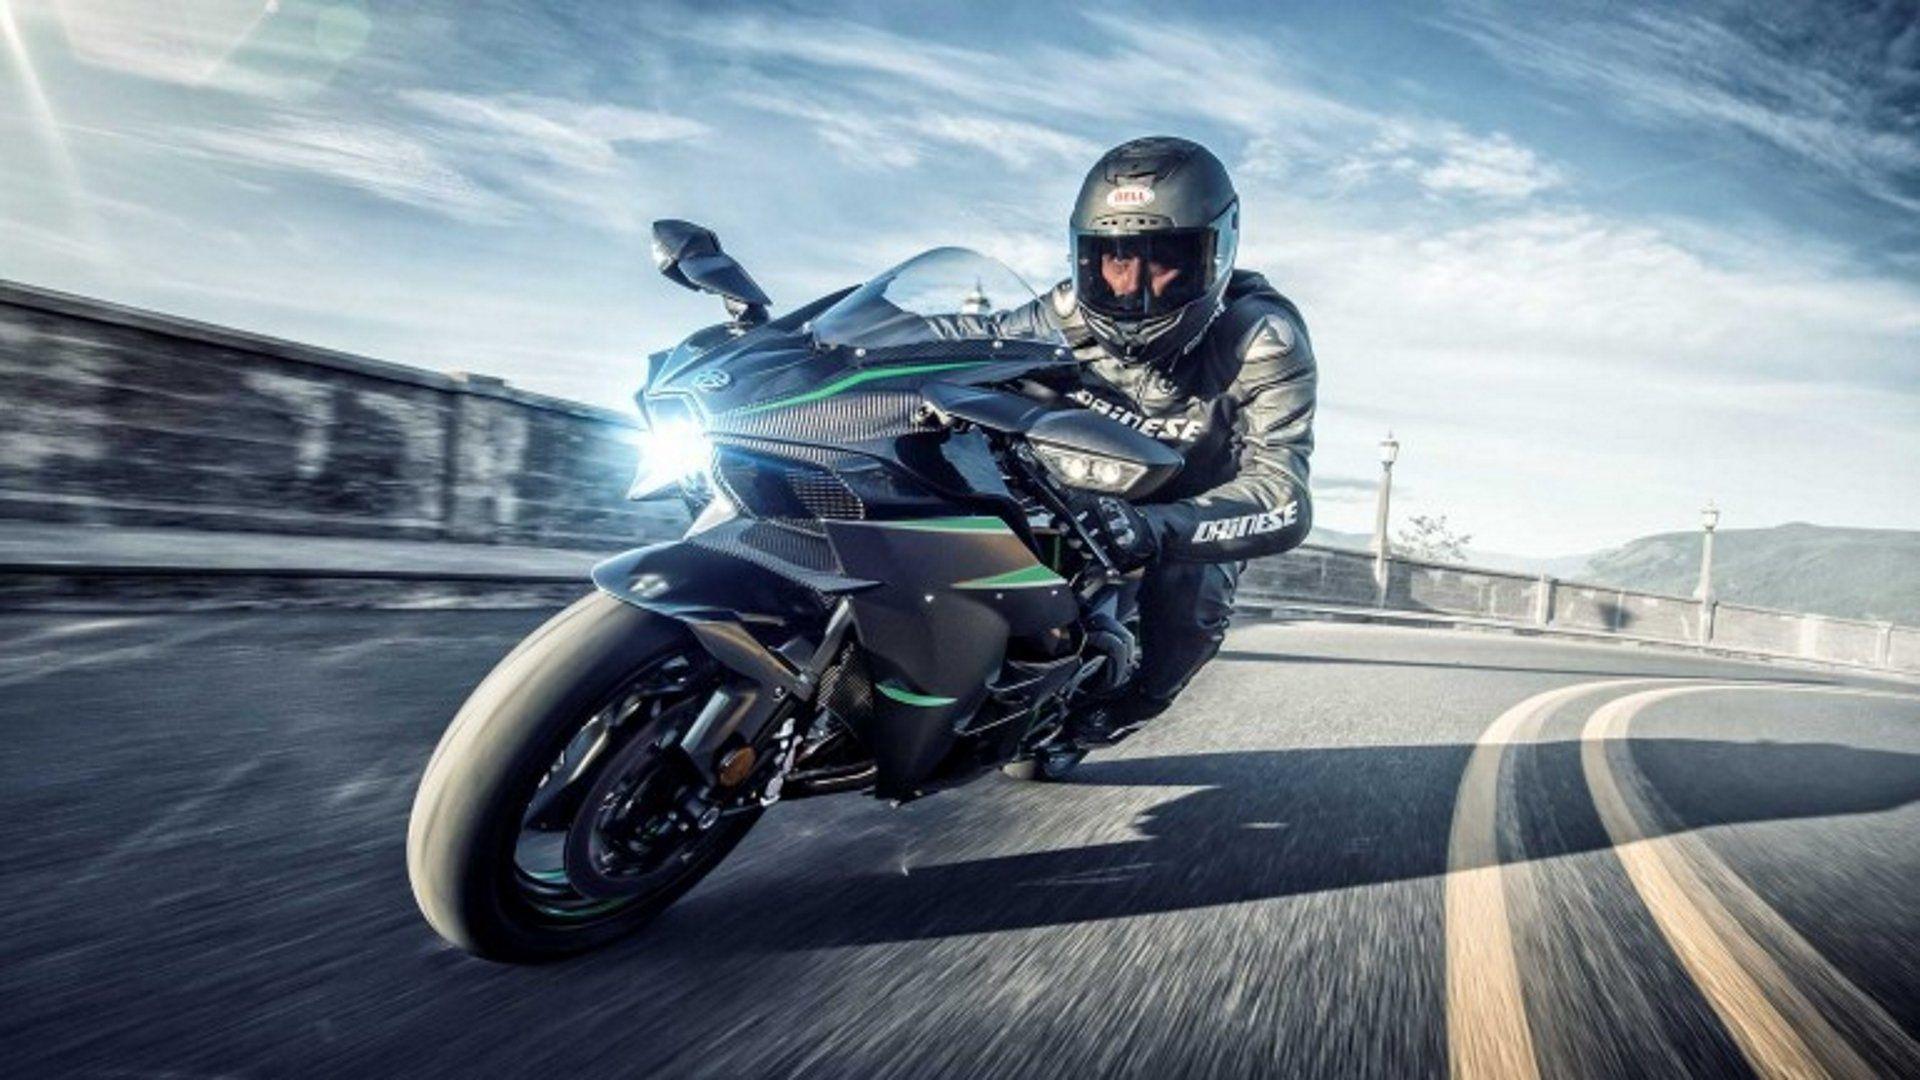 The Supercharged Kawasaki Ninja H2 Gets More Power and More Tech